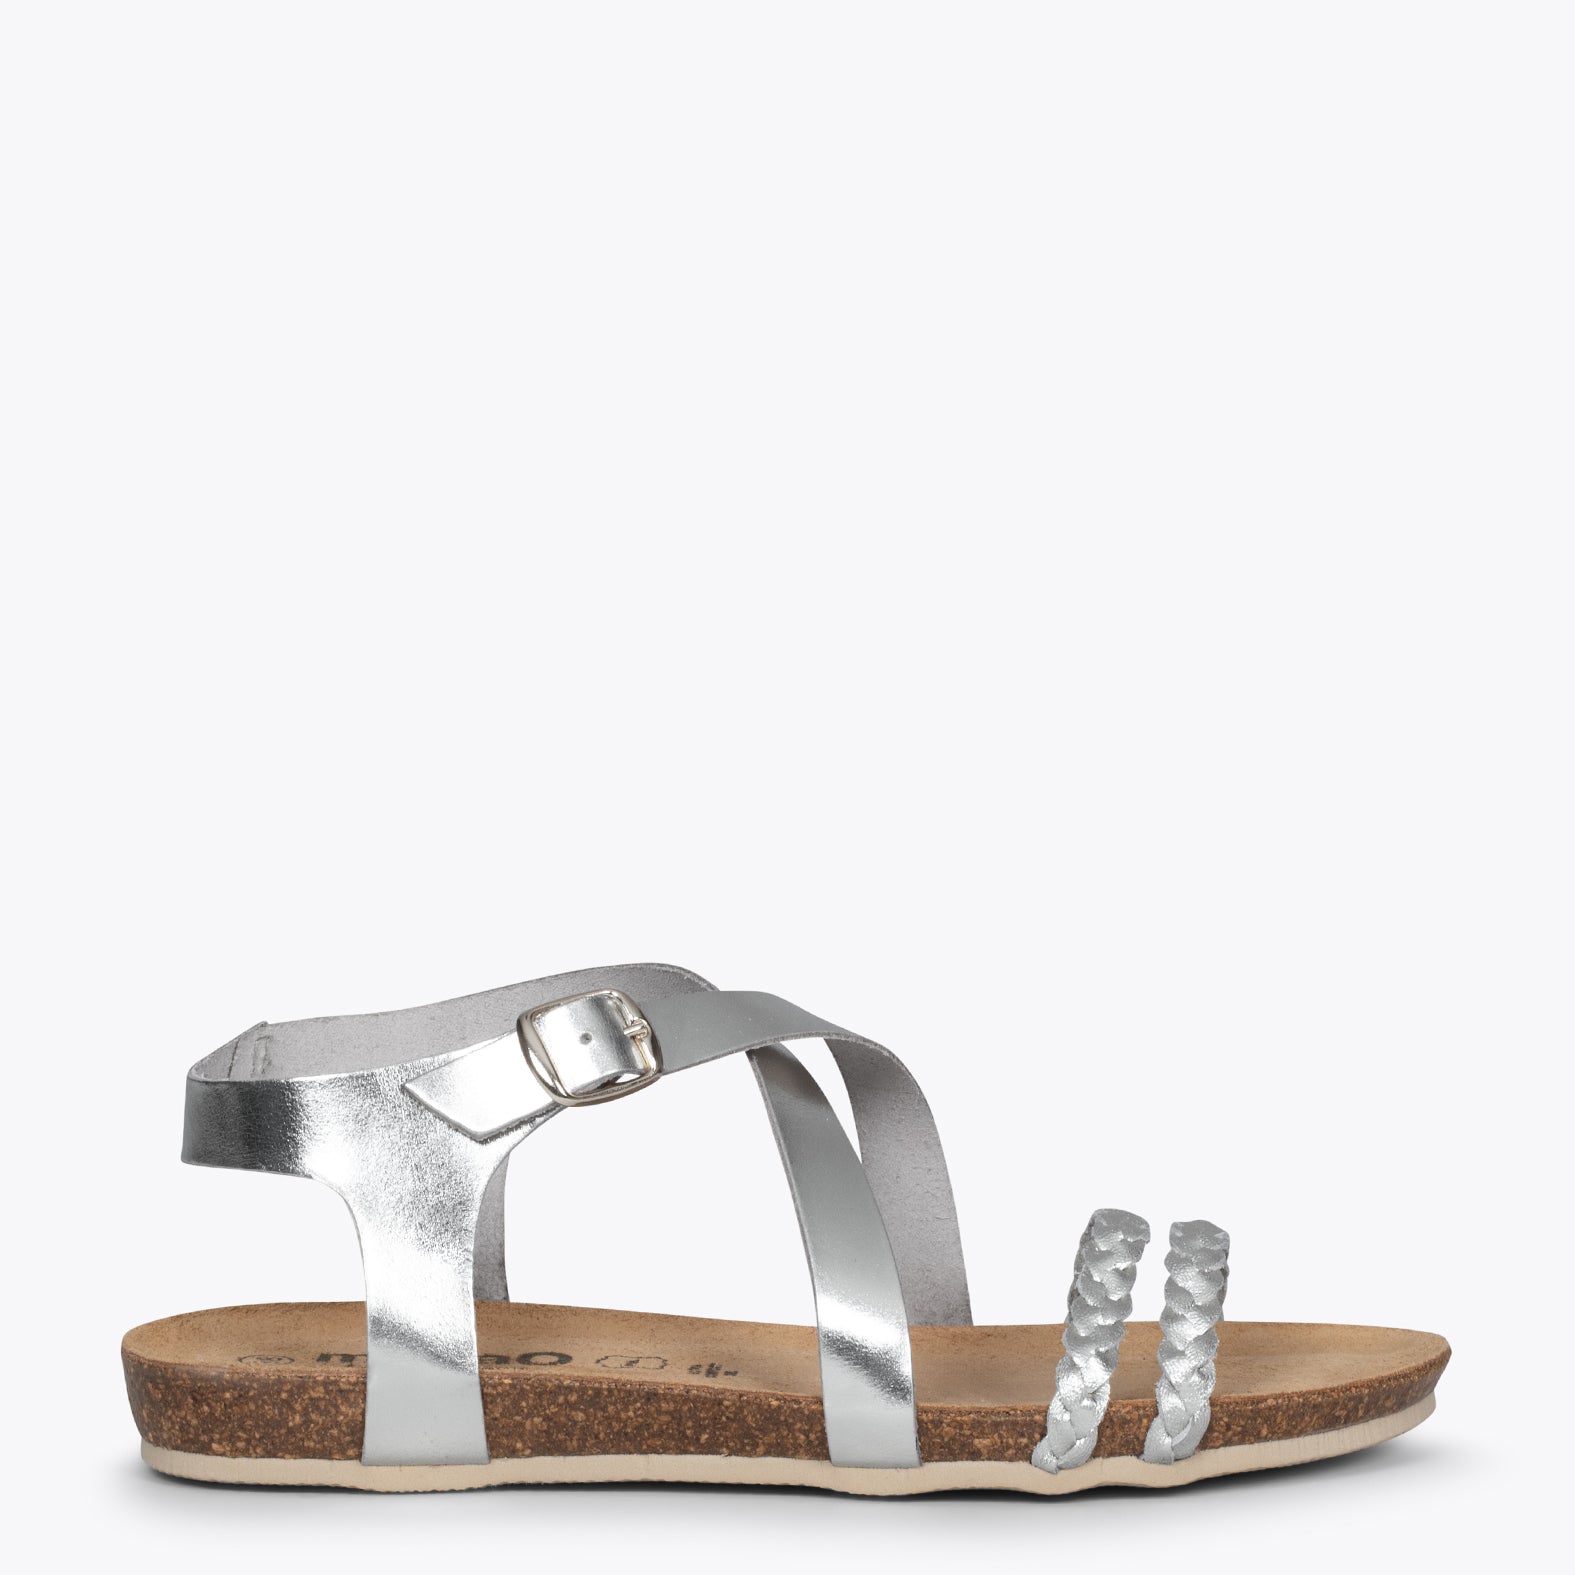 INDIE – SILVER BIO sandals with straps